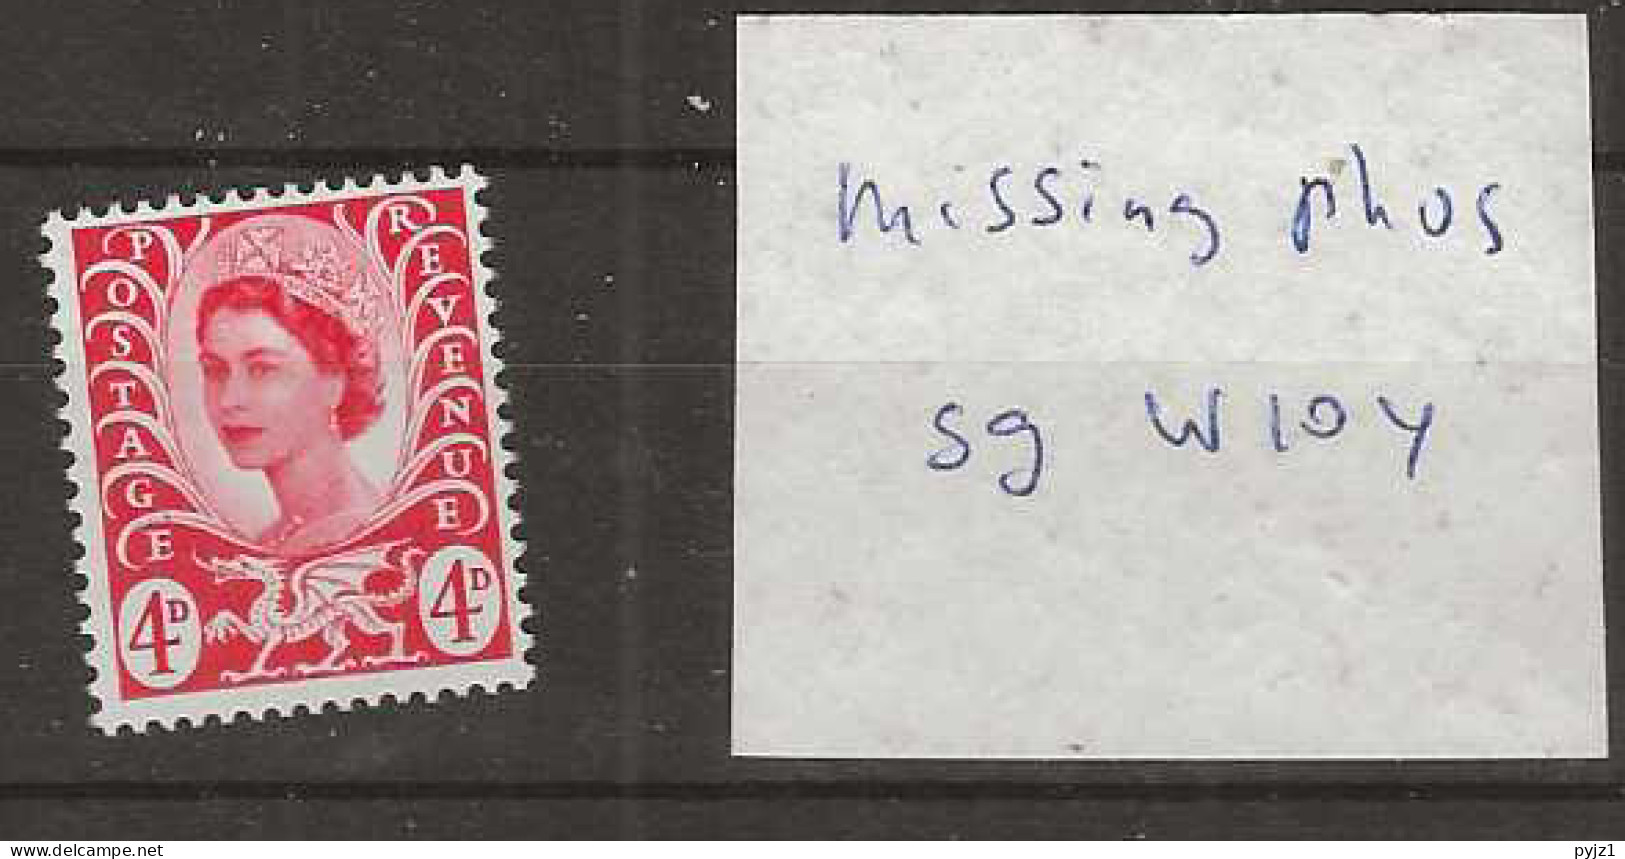 1969 MNH Wales SG W-10y Phosphor Omitted . - Errors, Freaks & Oddities (EFOs